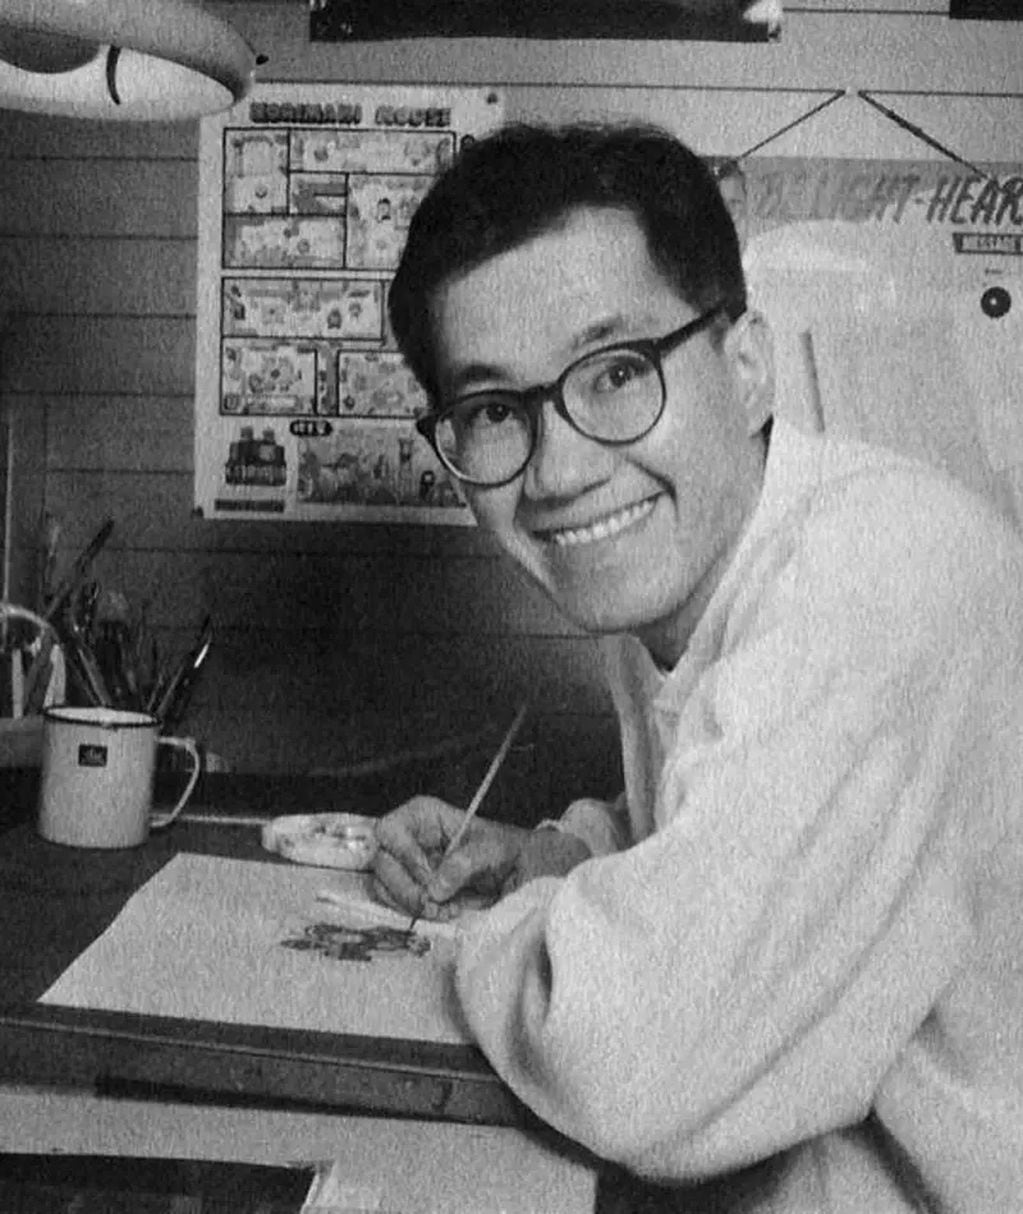 Falleció a los 68 años Akira Toriyama, creador de “Dragon Ball”